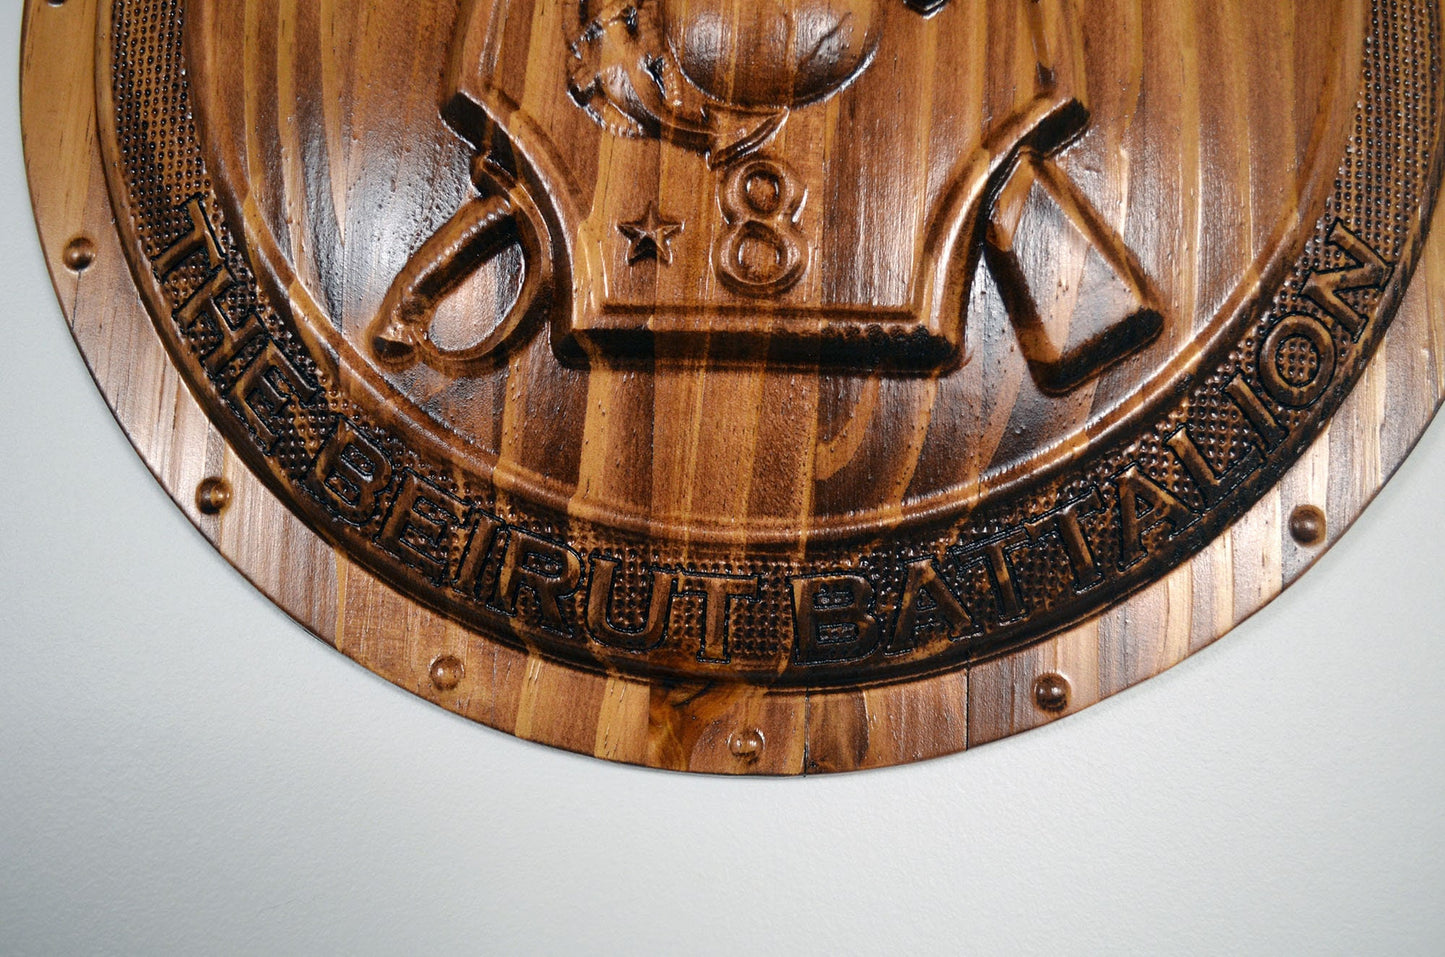 USMC 1st Battalion, 8th Marines, Unit Emblem, US Marine Corps, military plaque